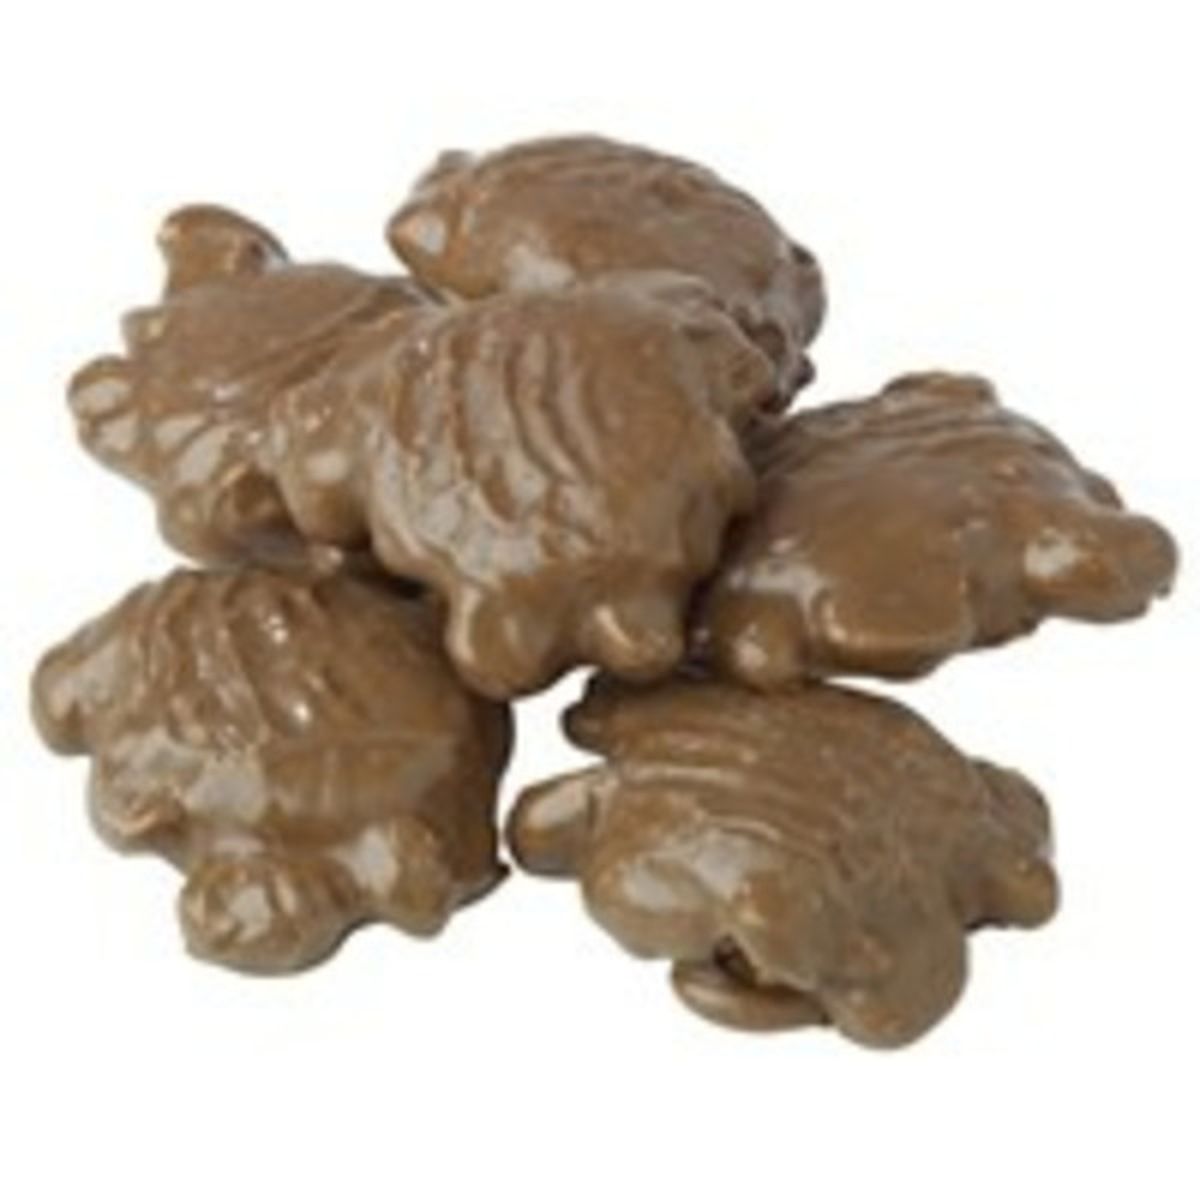 Calories in Wegmans Chocolate Peanut Caramel Clusters